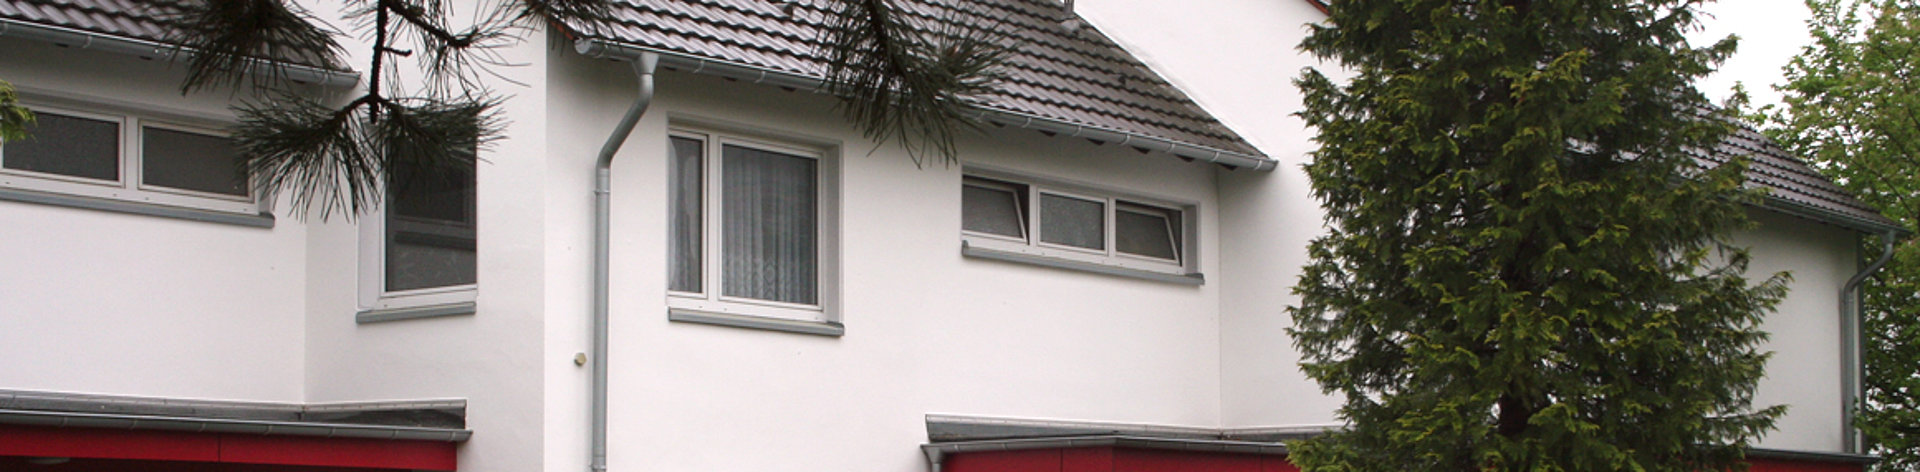 Fassadengestaltung Reihenhauses mit  Trespa Farbe kaminrot